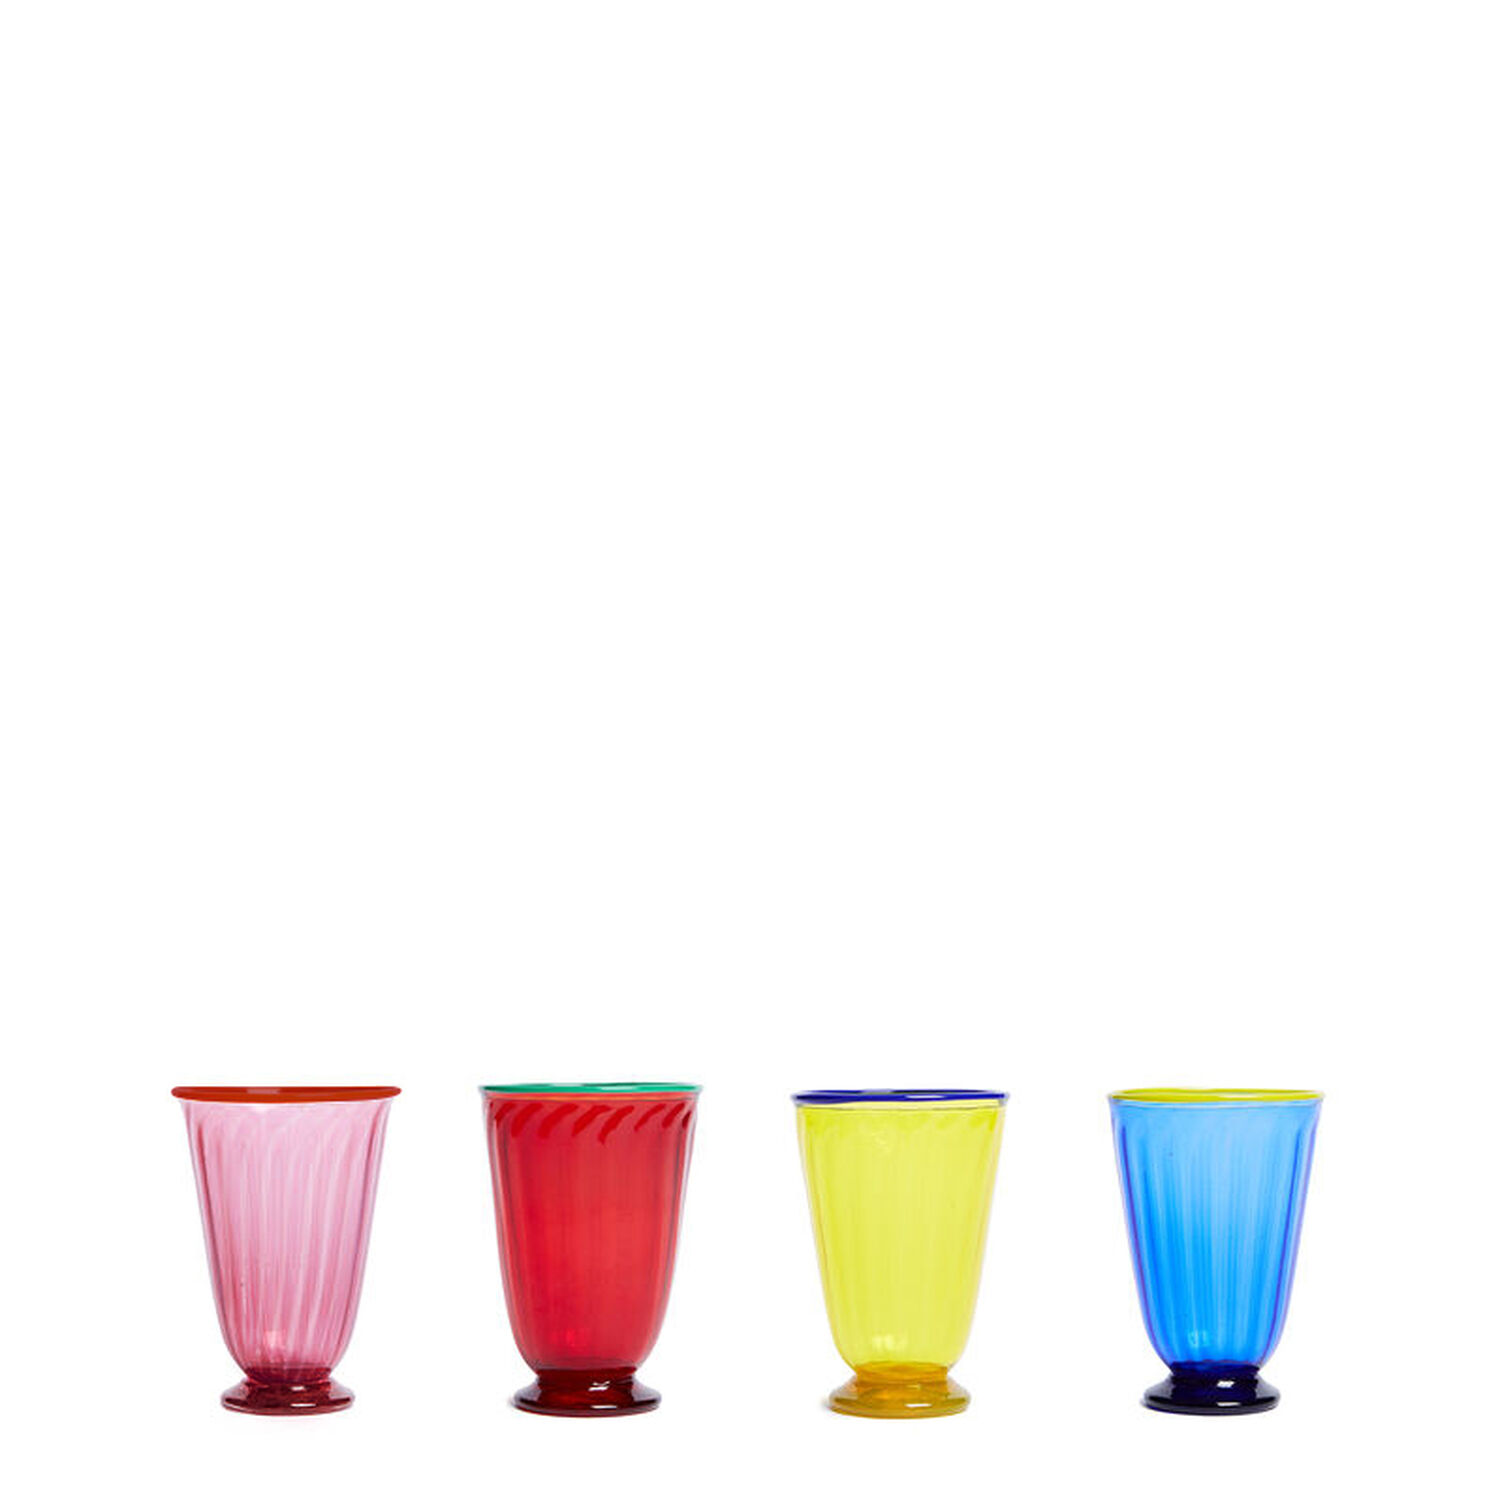 Pineapple Rainbow set of 4 wine glasses in pink - La Double J